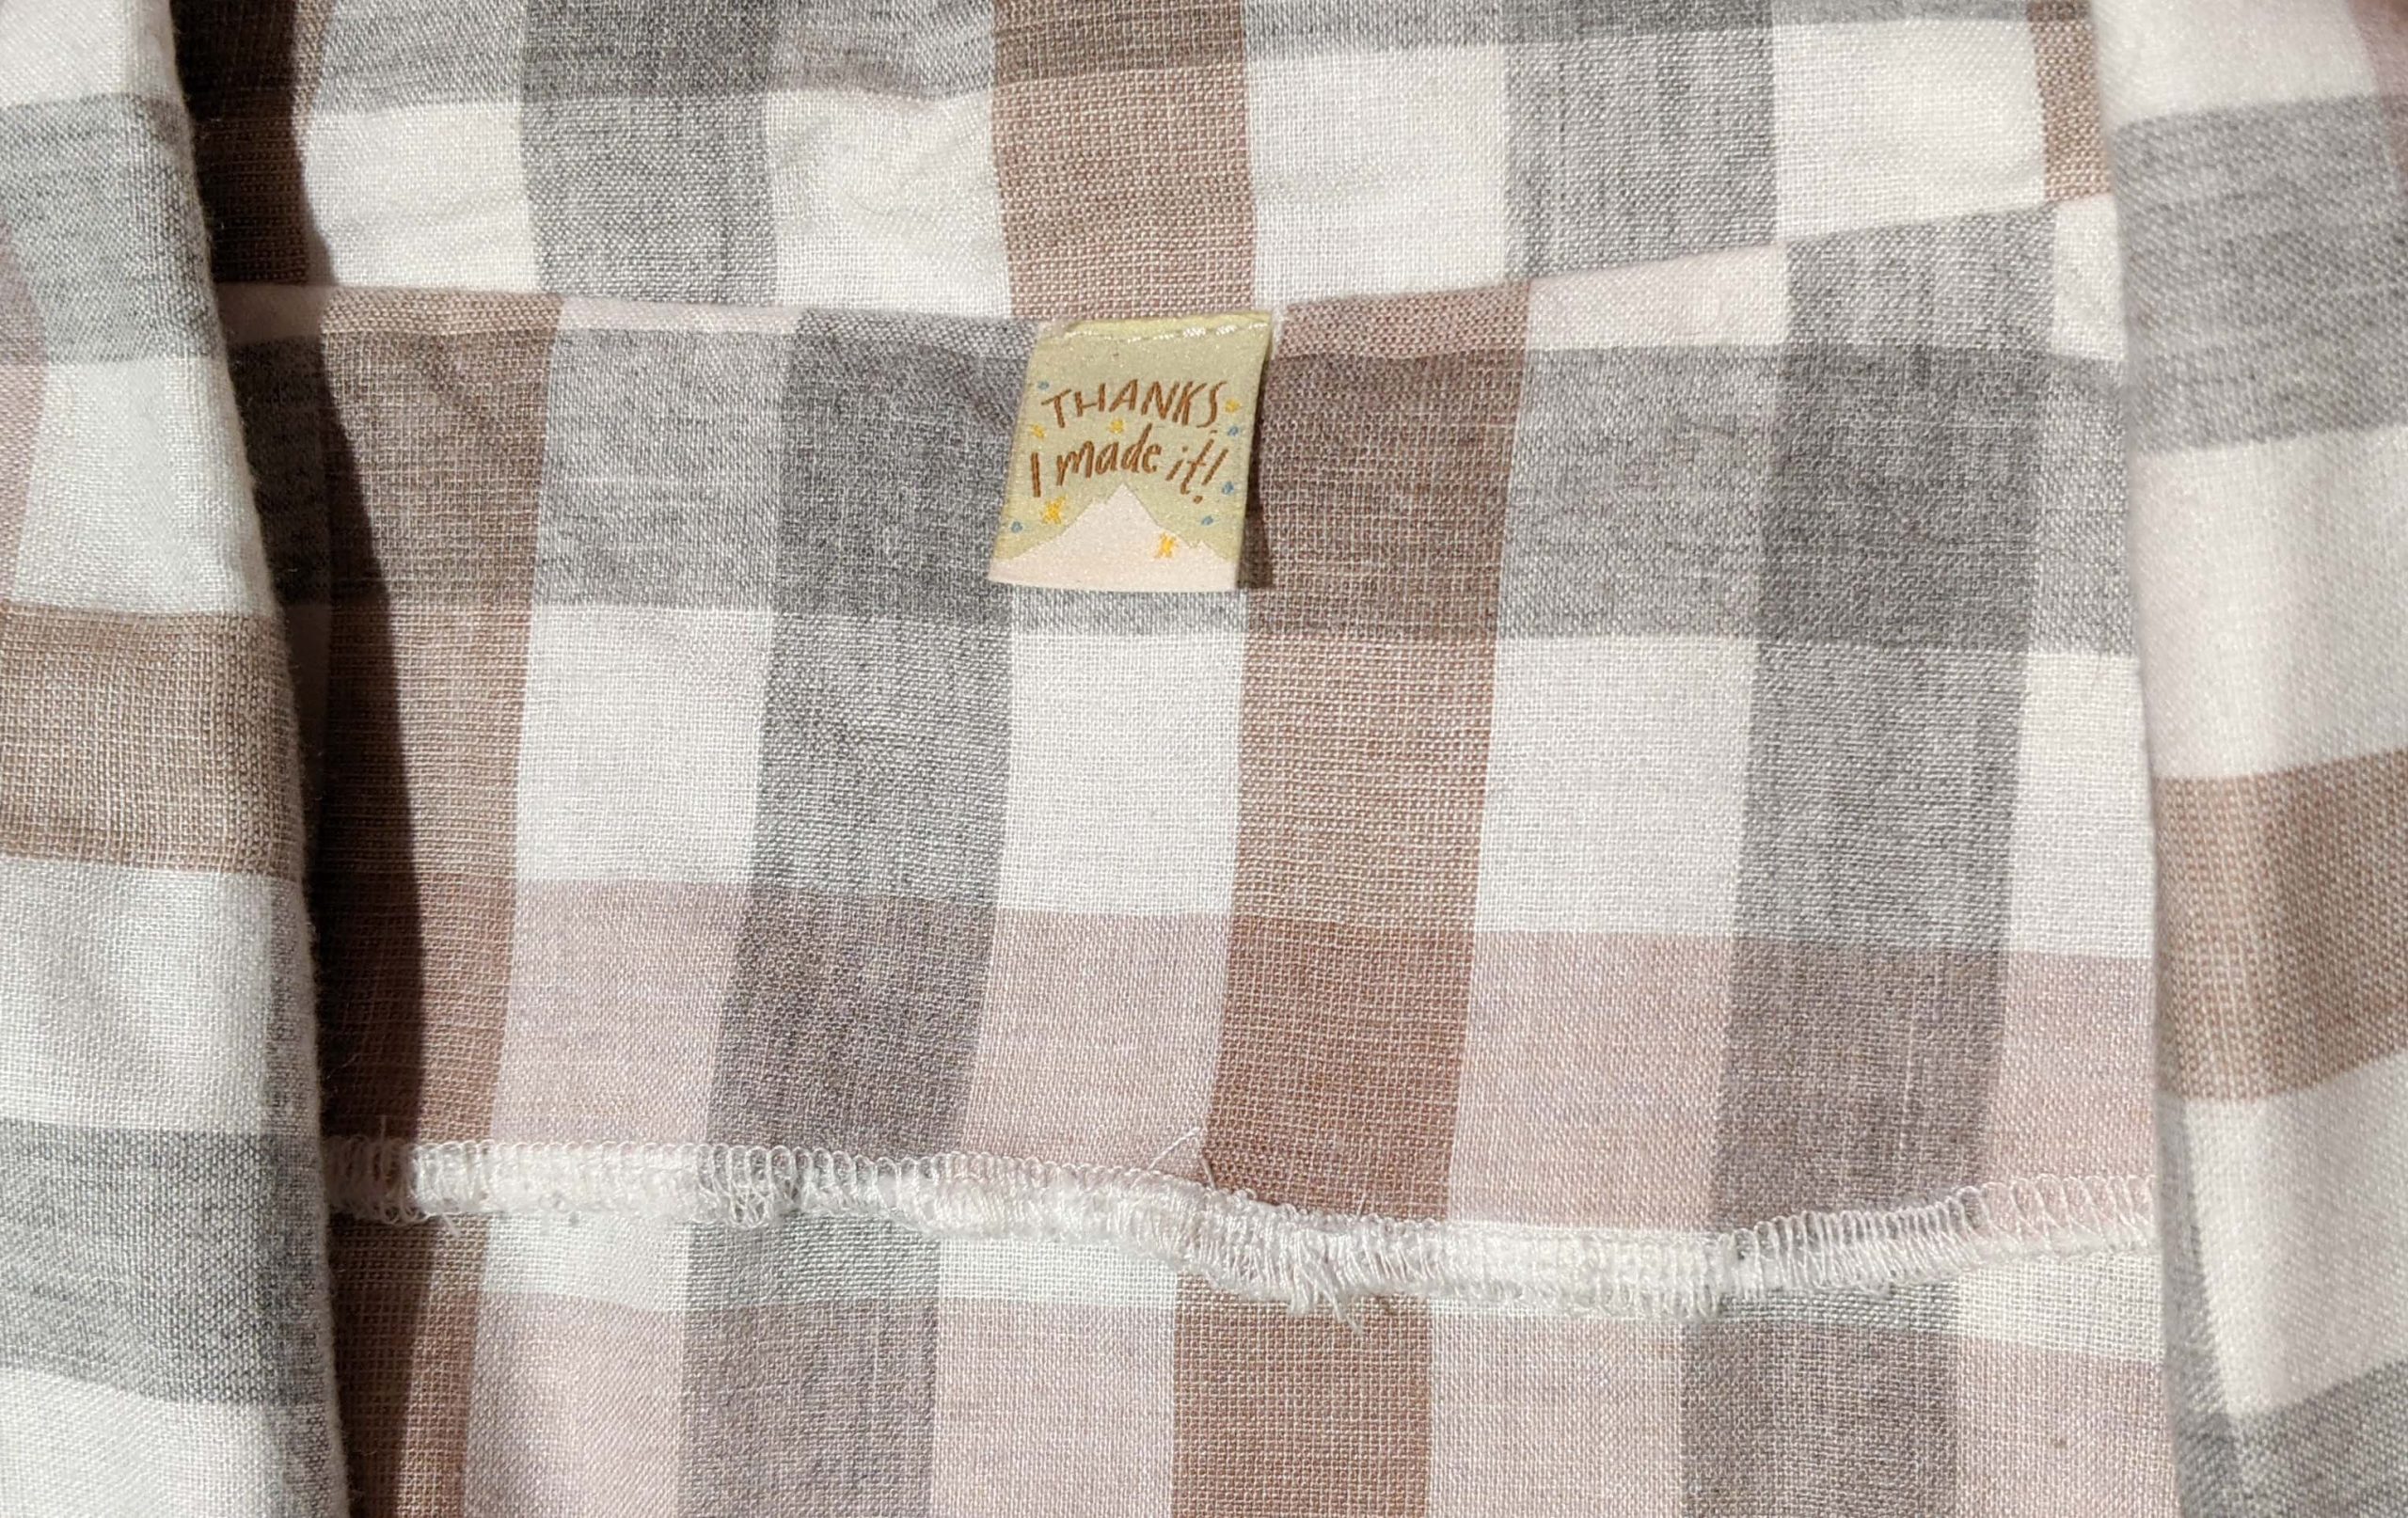 Helen's Closet Pona Jacket sewn by Plein Vanity- special tag